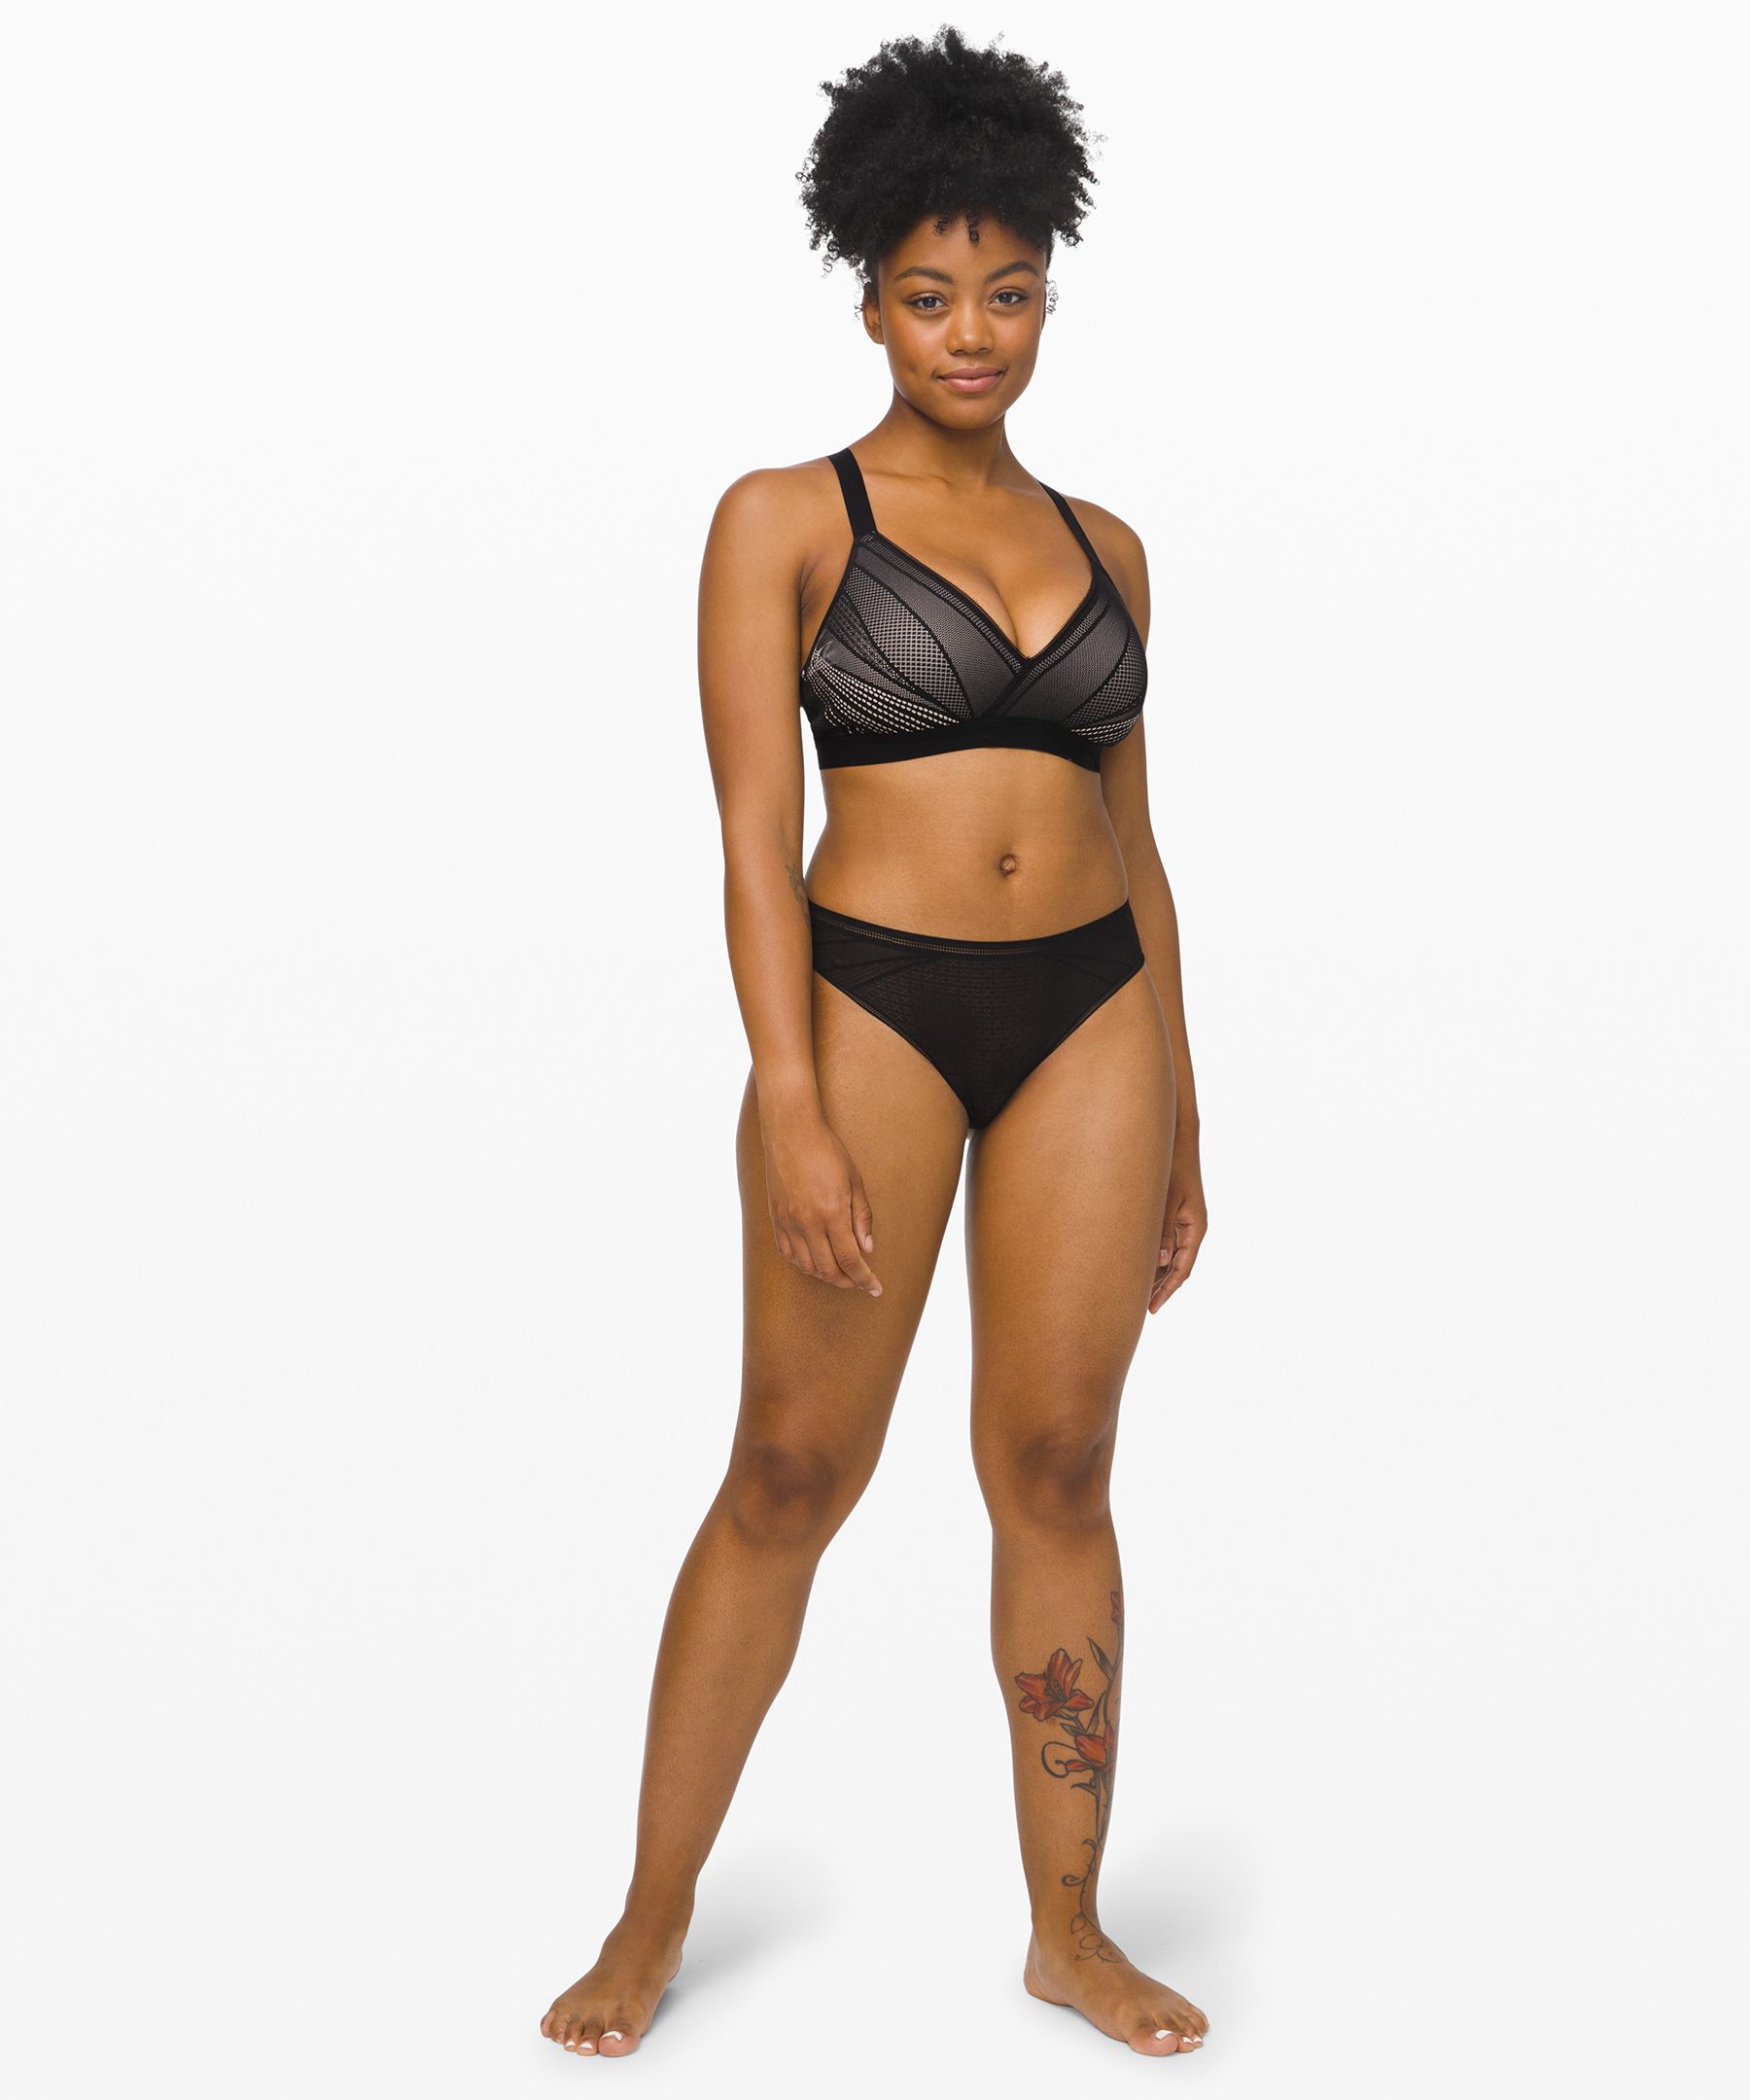 Lululemon Awake to Lace Black Sports Bra Size 34 E / DD - $25 (71% Off  Retail) - From Ashley